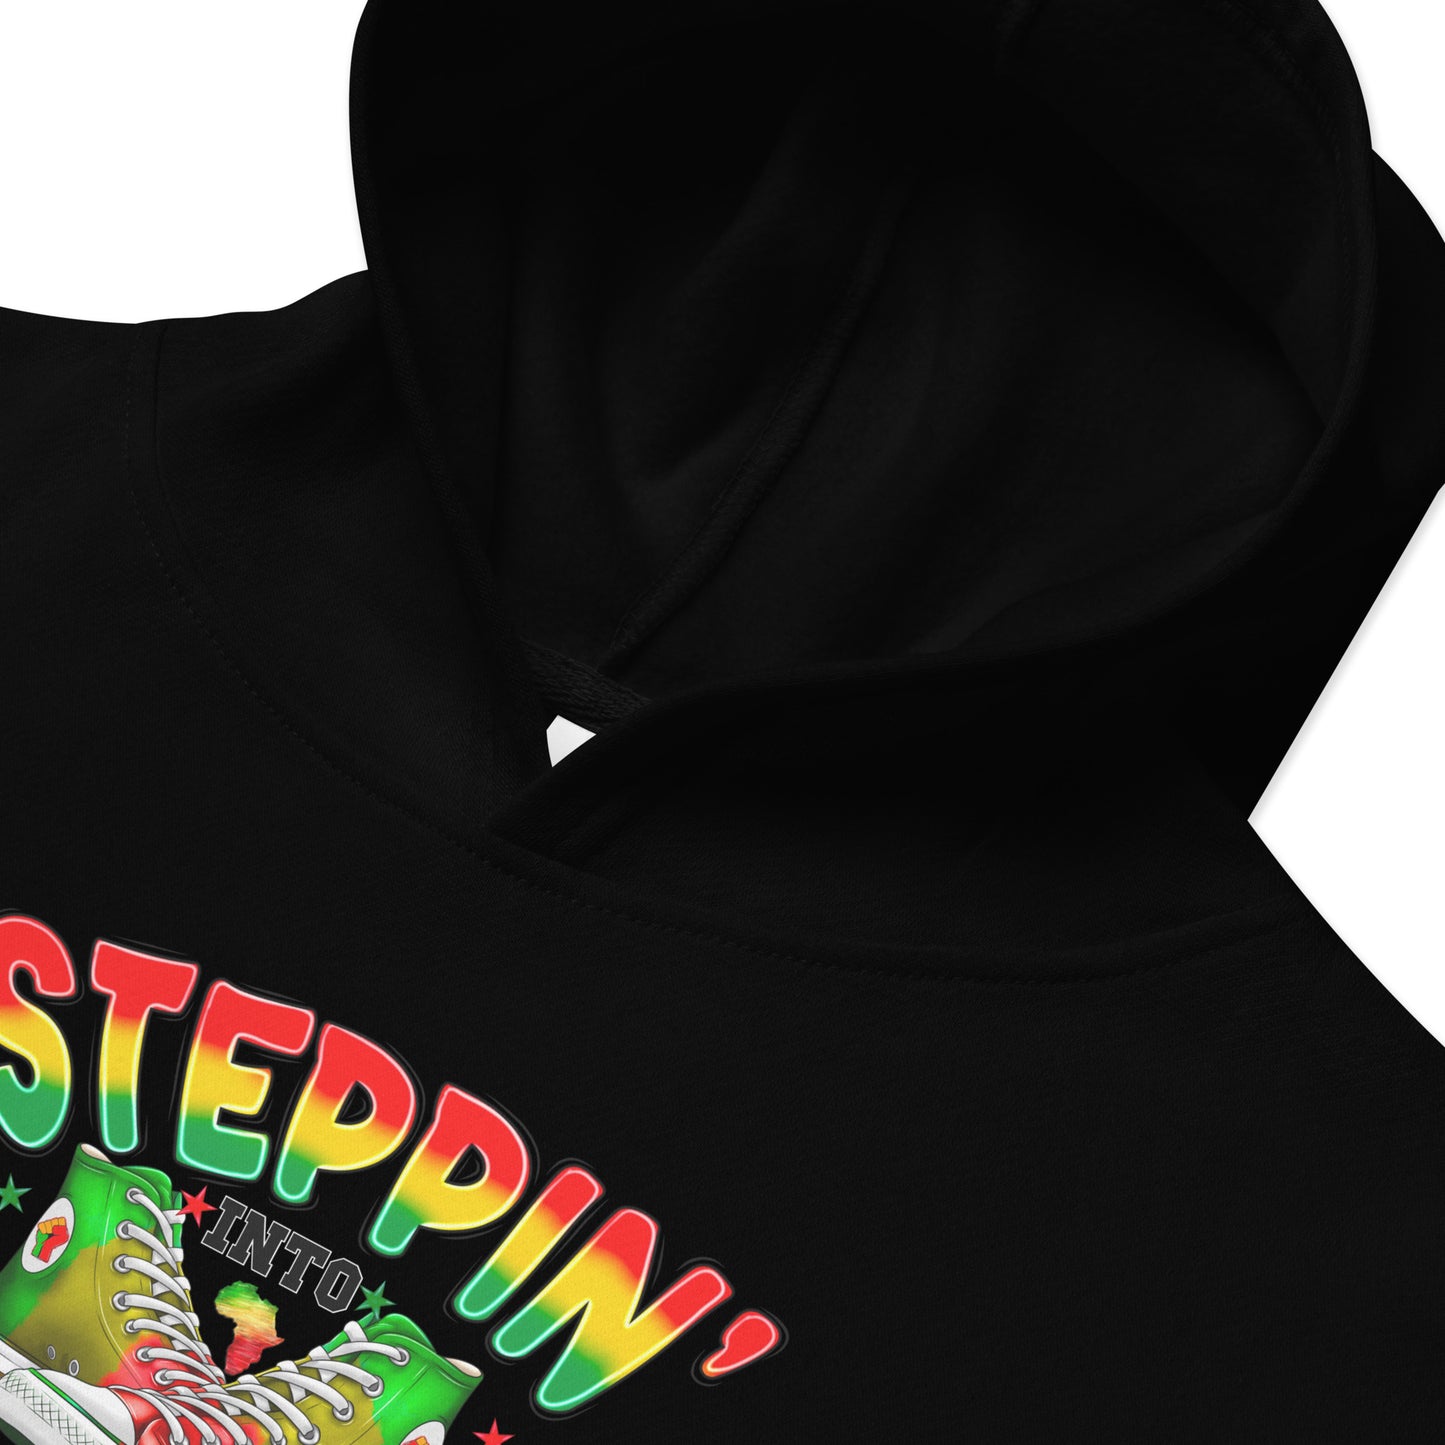 Kids fleece hoodie - Steppin Into Black History Month